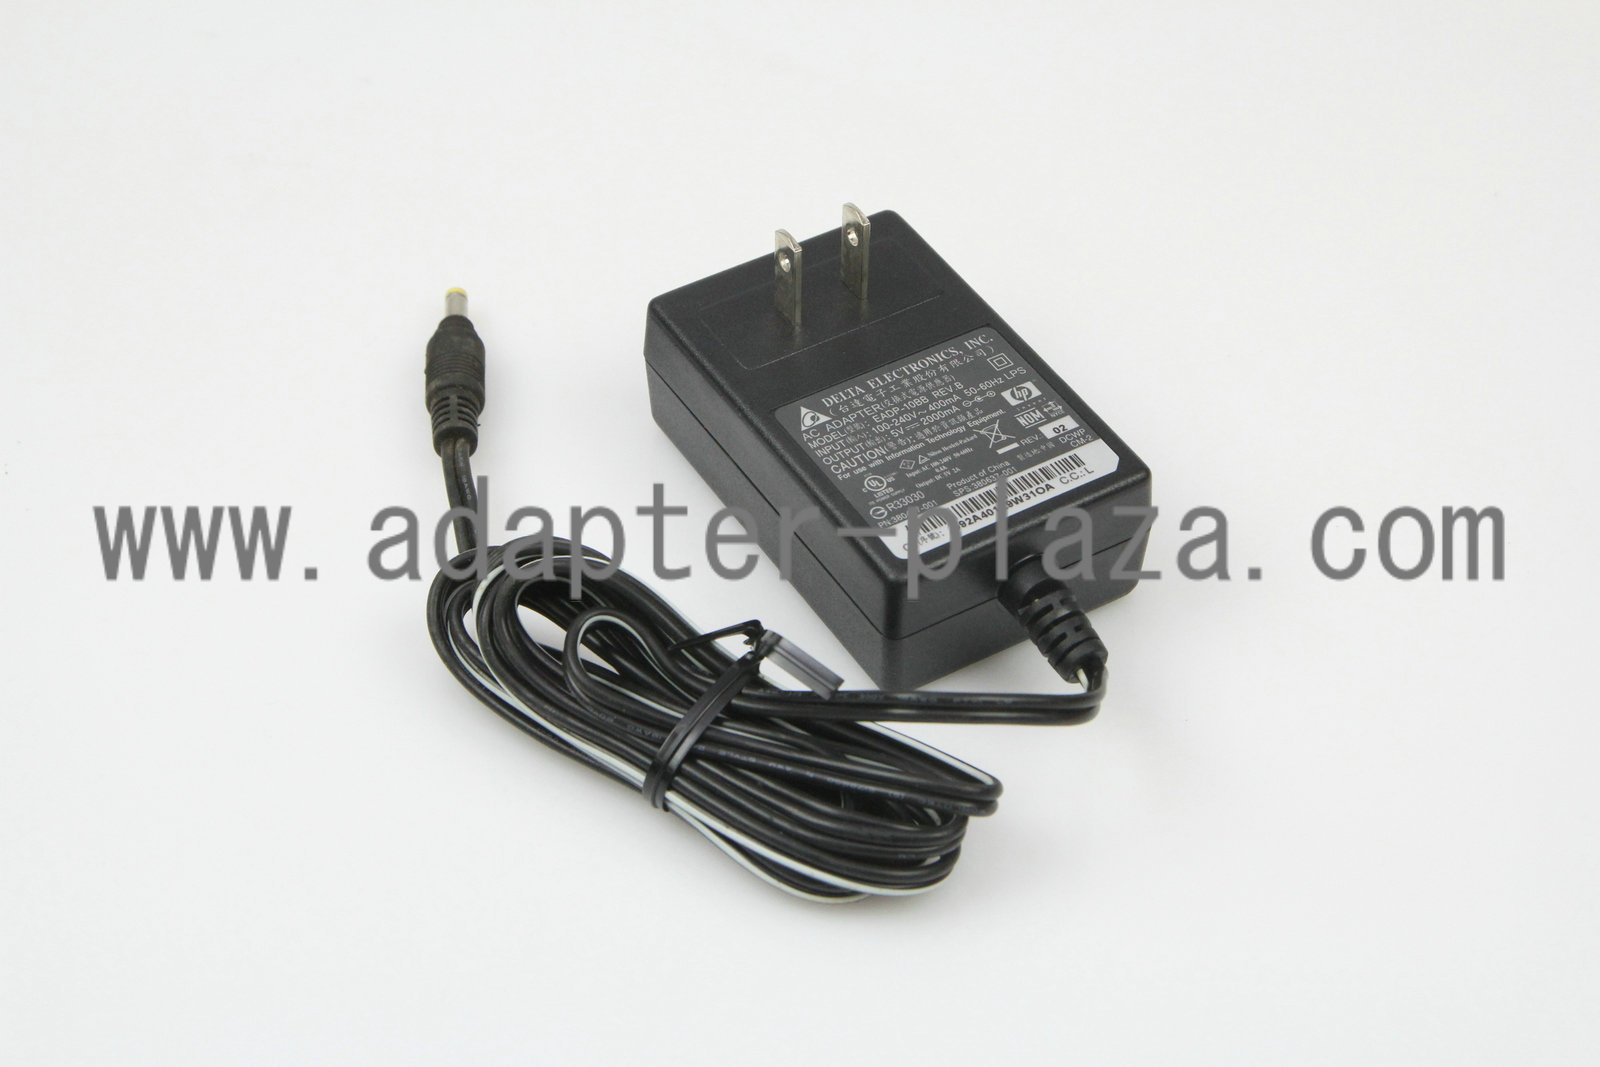 Genuine 5V 2000mA Delta ADP-10SB EADP-10BB AC Adapter Power Charger US Plug